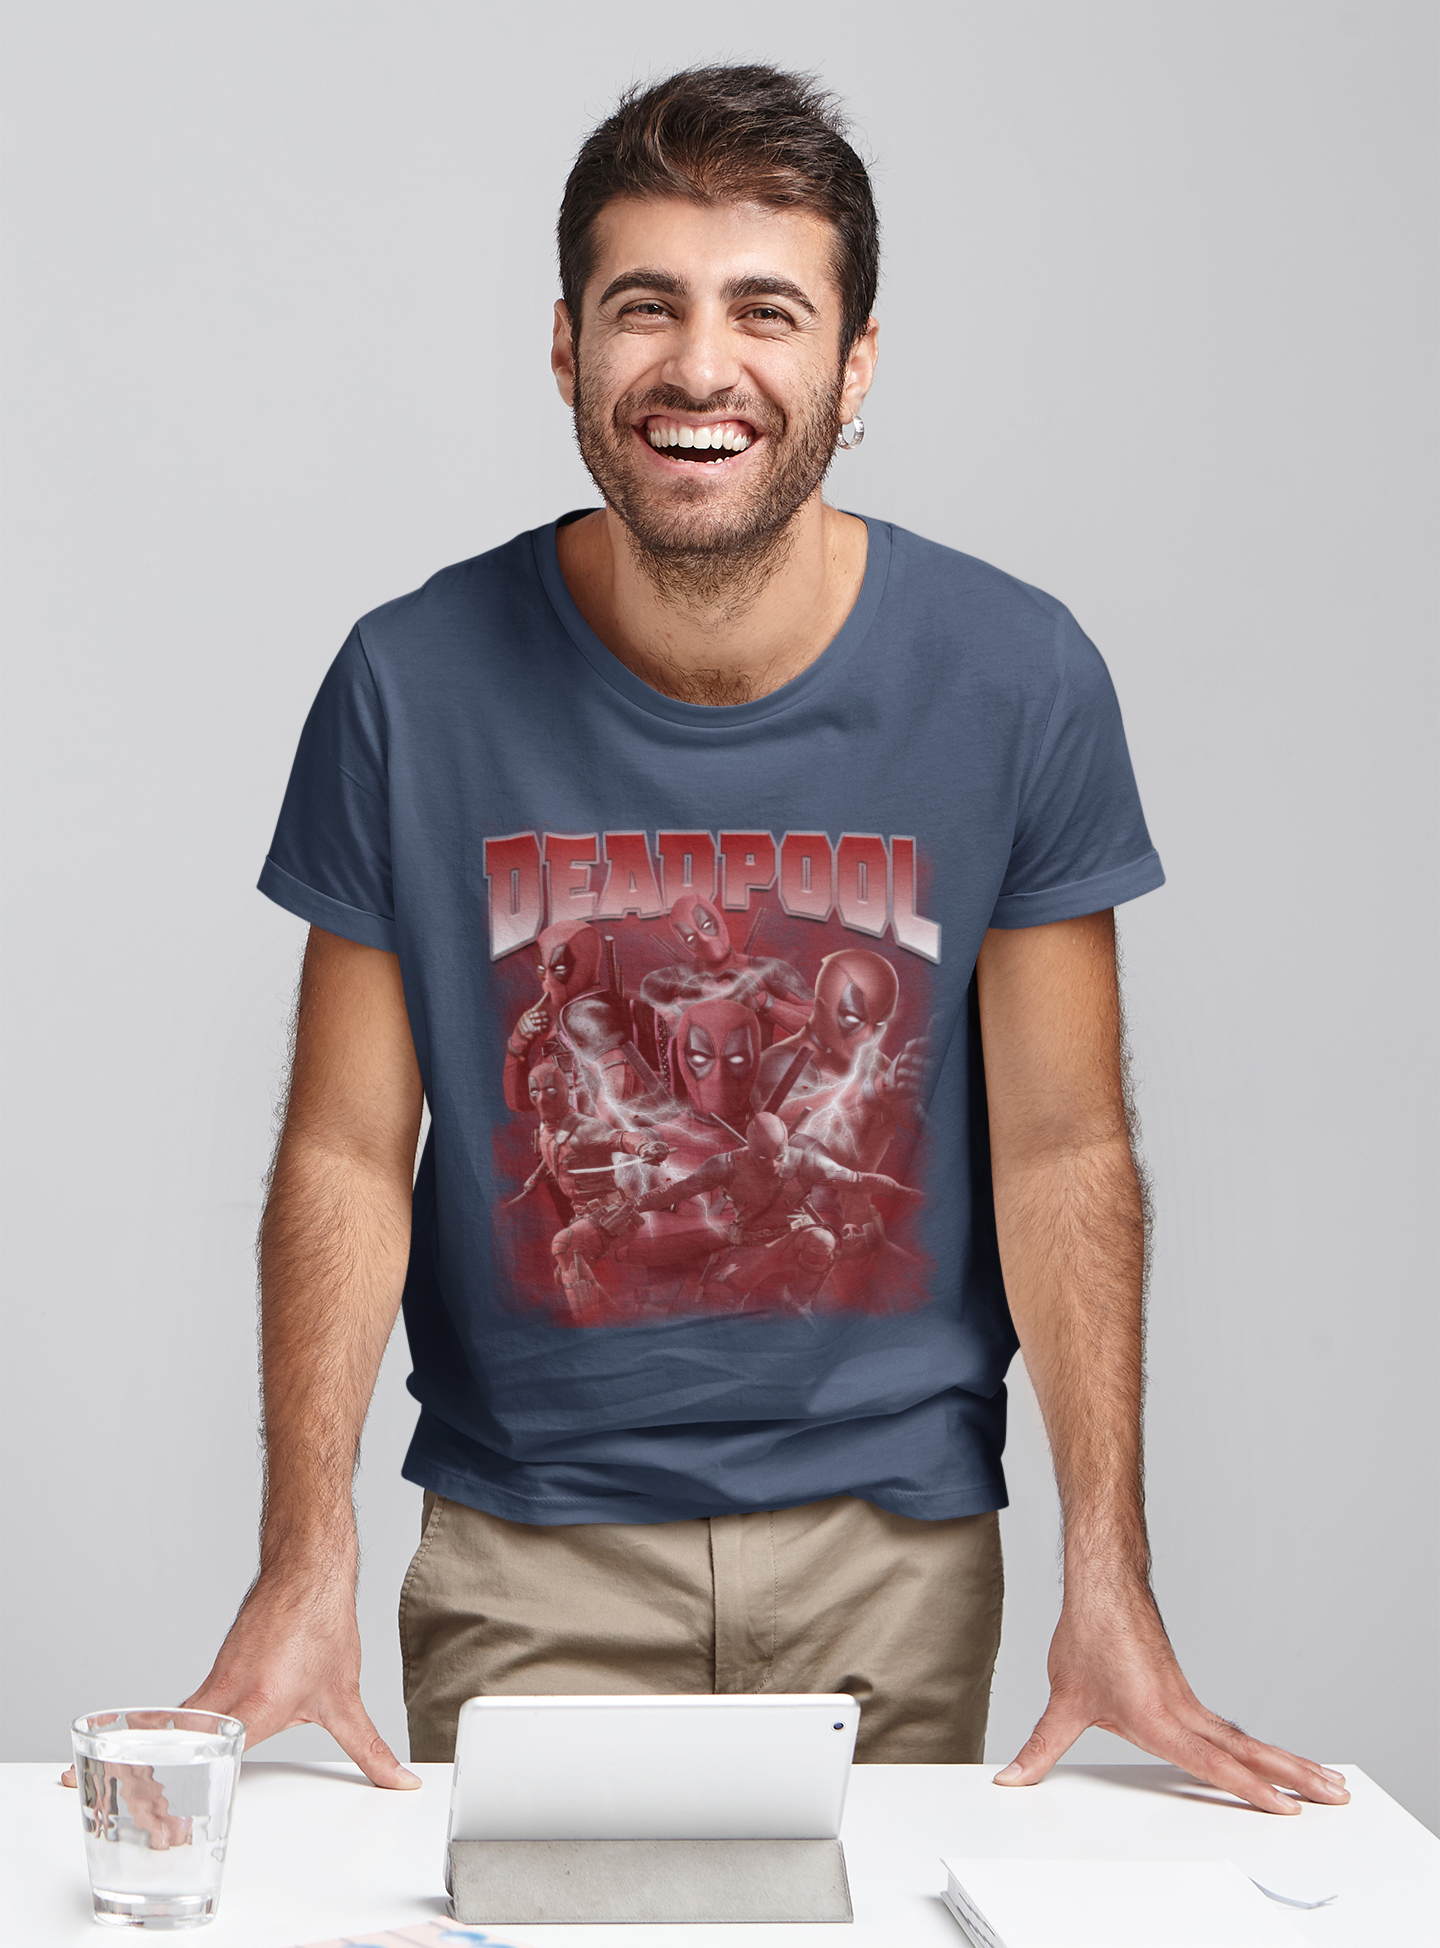 Deadpool T Shirt, Superhero Deadpool Classic T Shirt